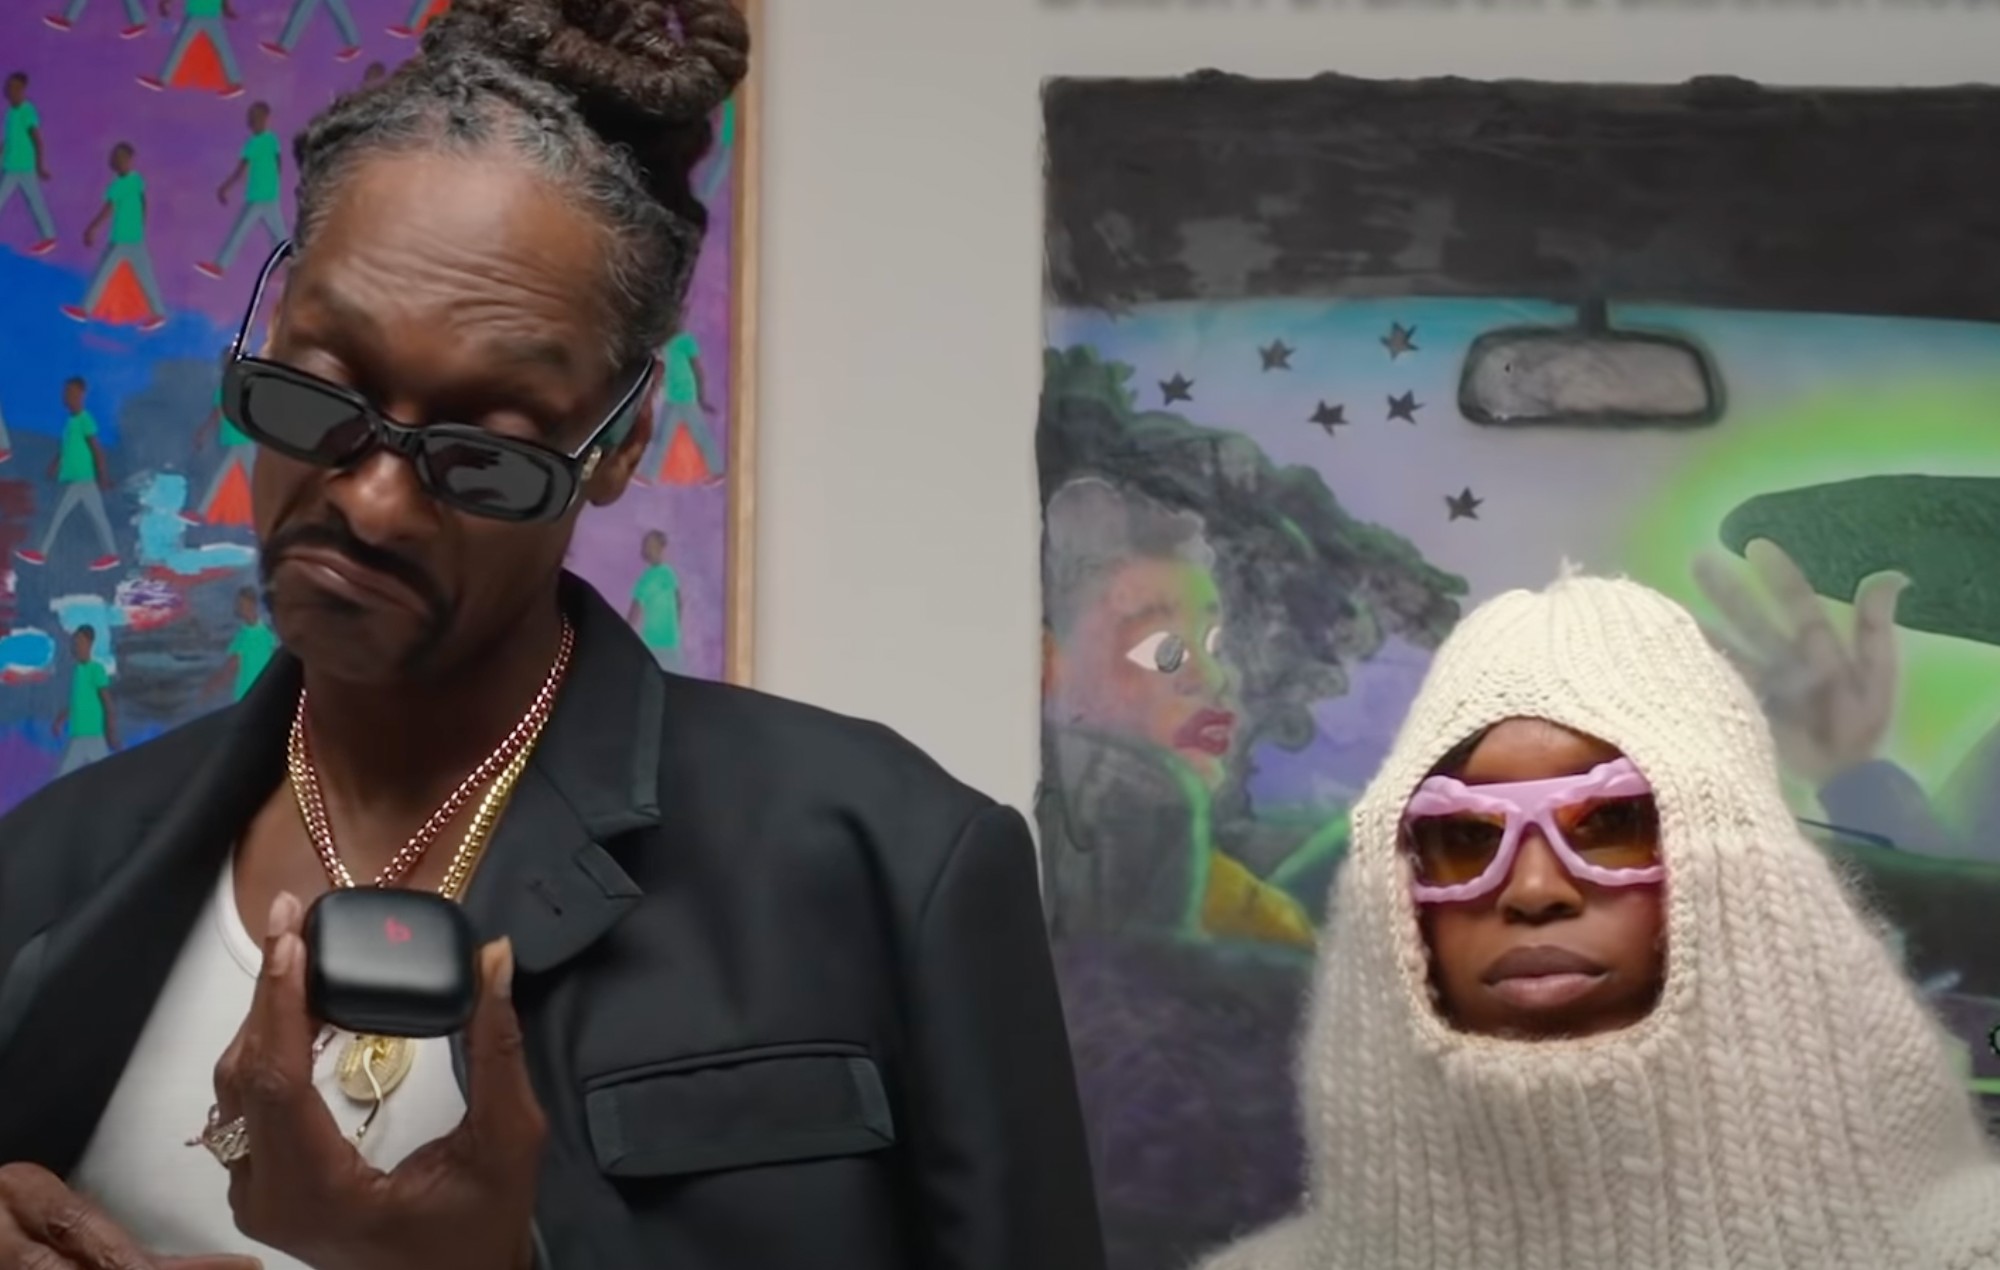 Snoop Dogg drops “Make Alot of Money” Video featuring Fabolous, Hi-Tek & Dave East